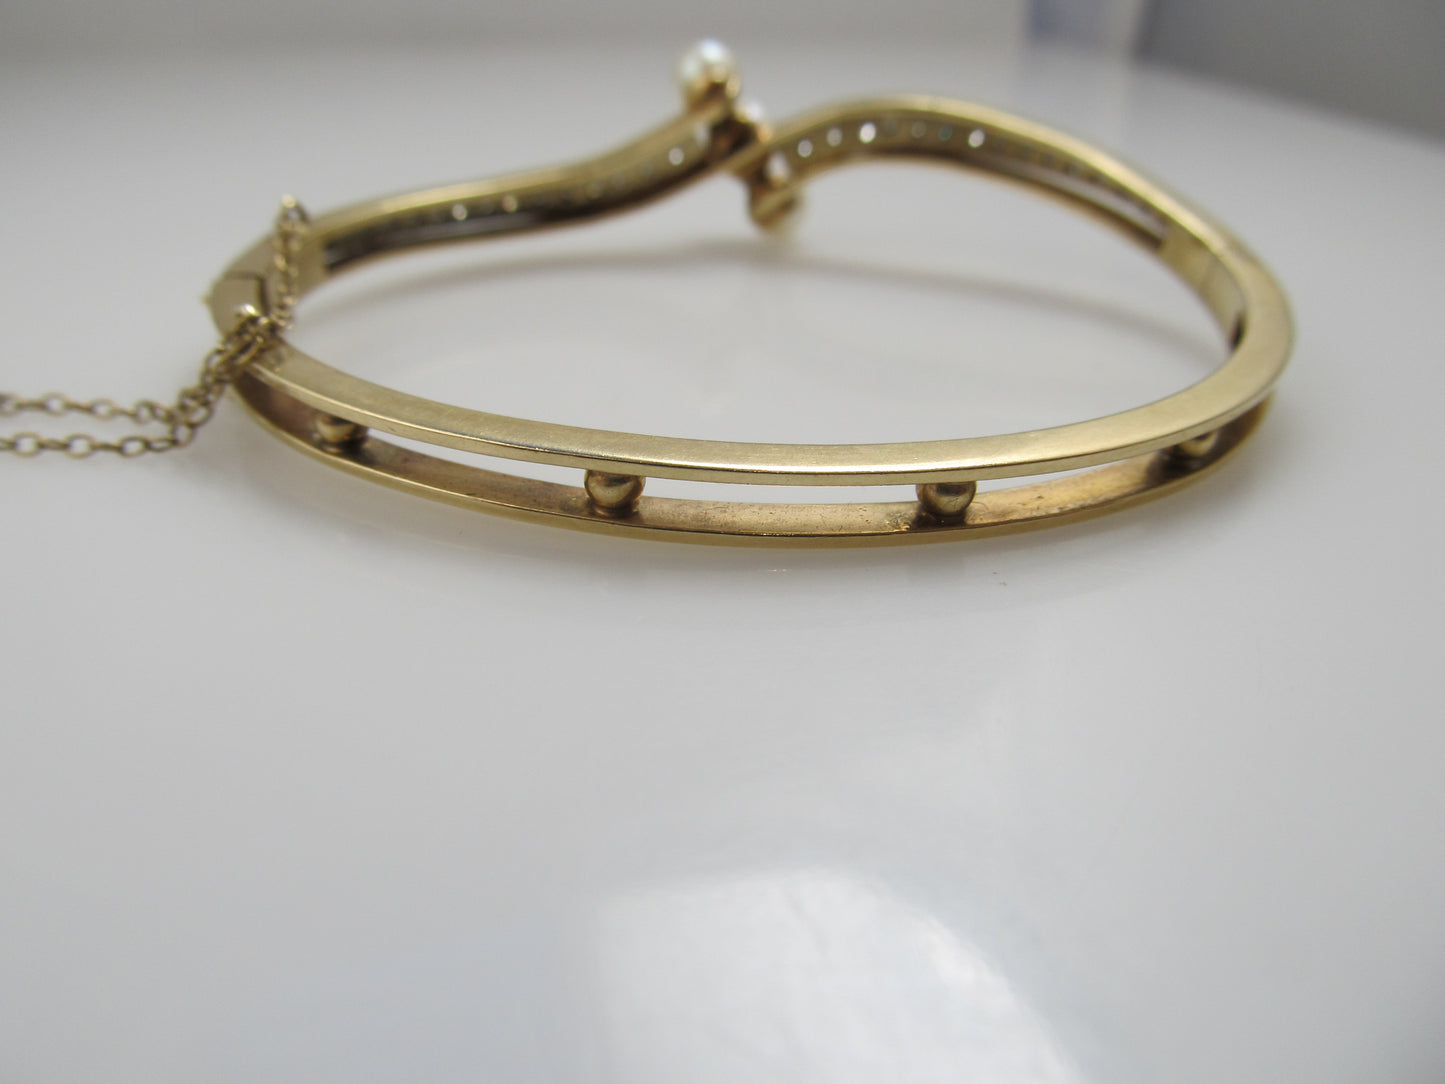 Vintage Pearl And Diamond Bangle Bracelet, 14k Yellow Gold